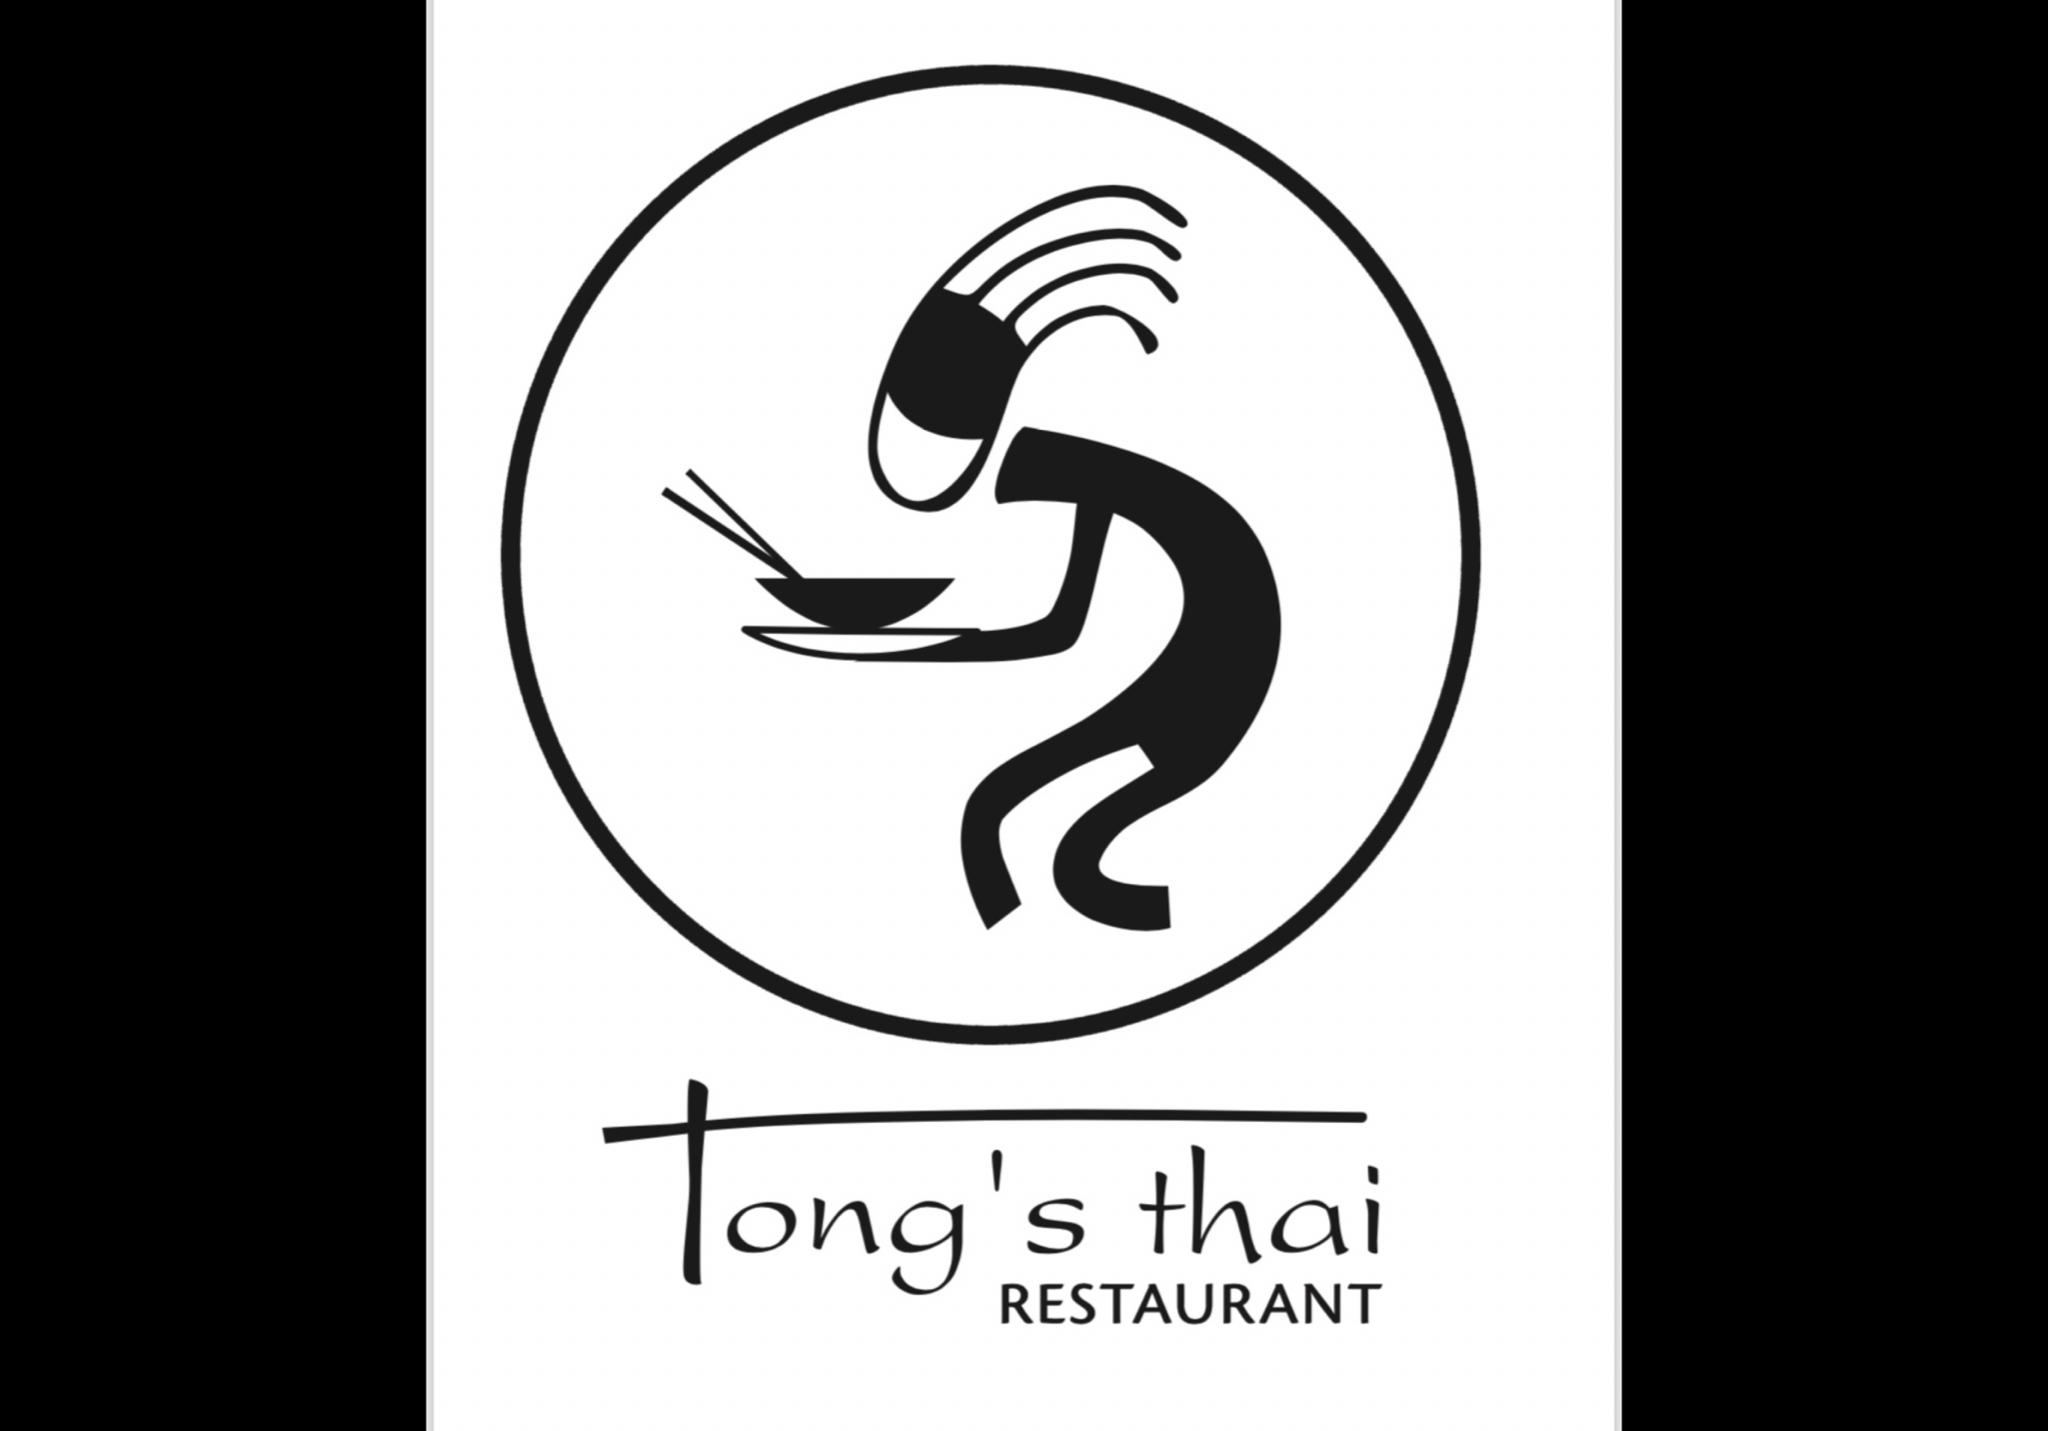 Tong’s Thai Restaurant